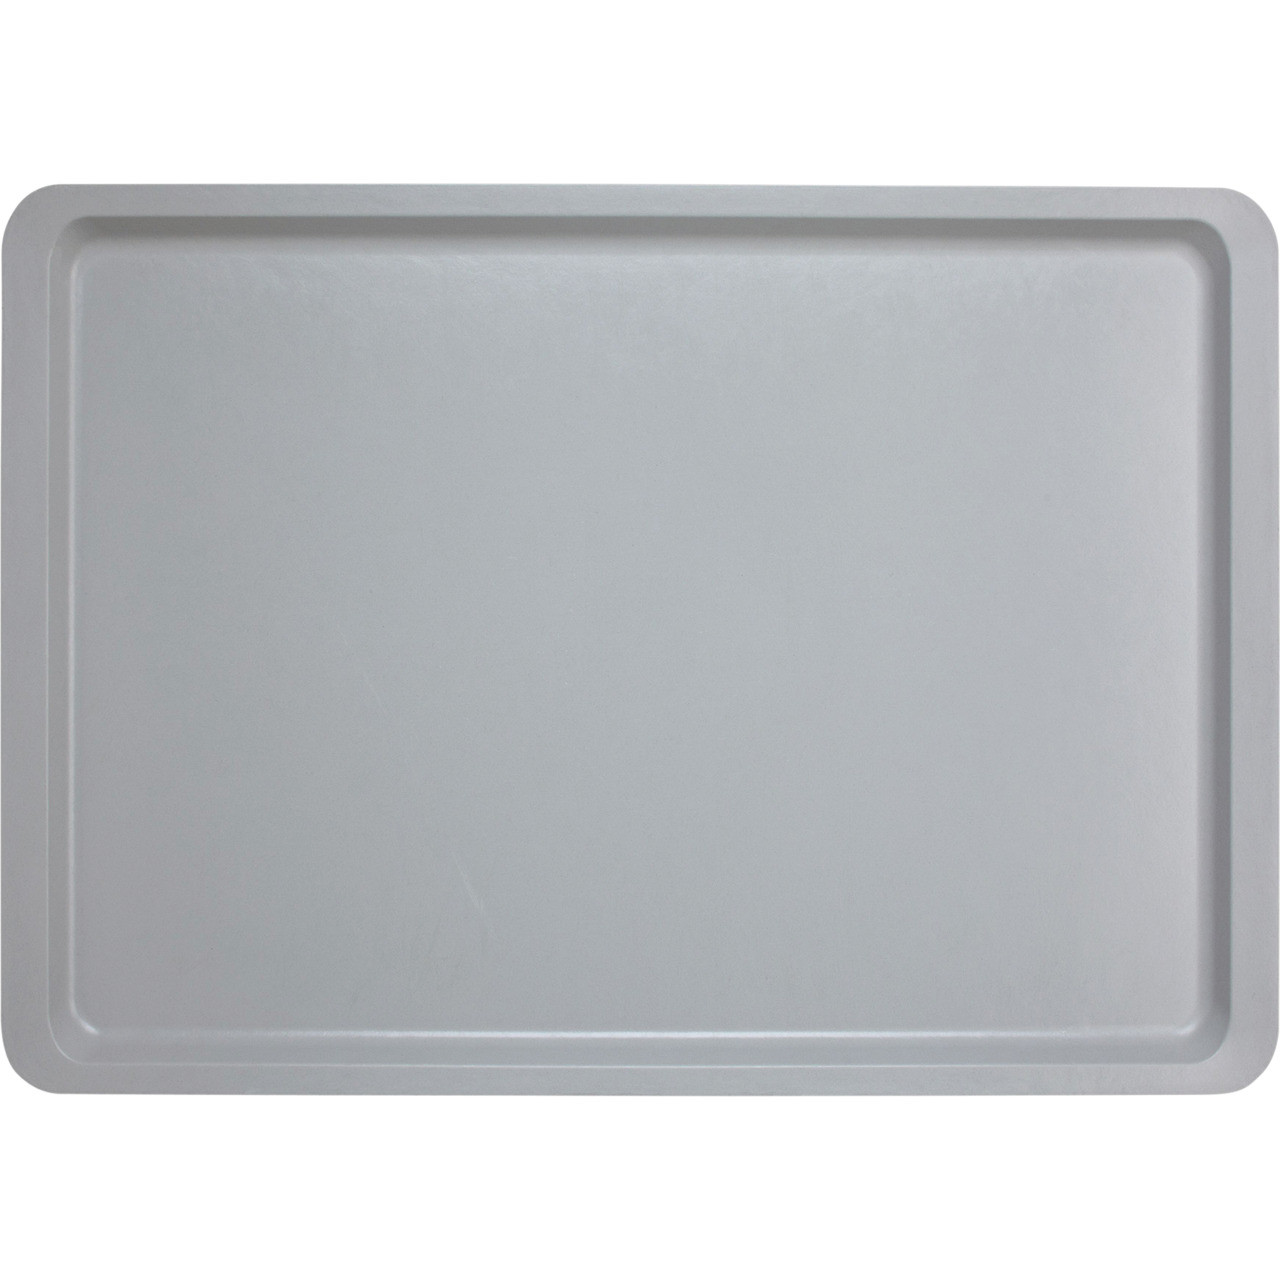 Tablett Polyester Versa glatt 450 x 320 mm lichtgrau